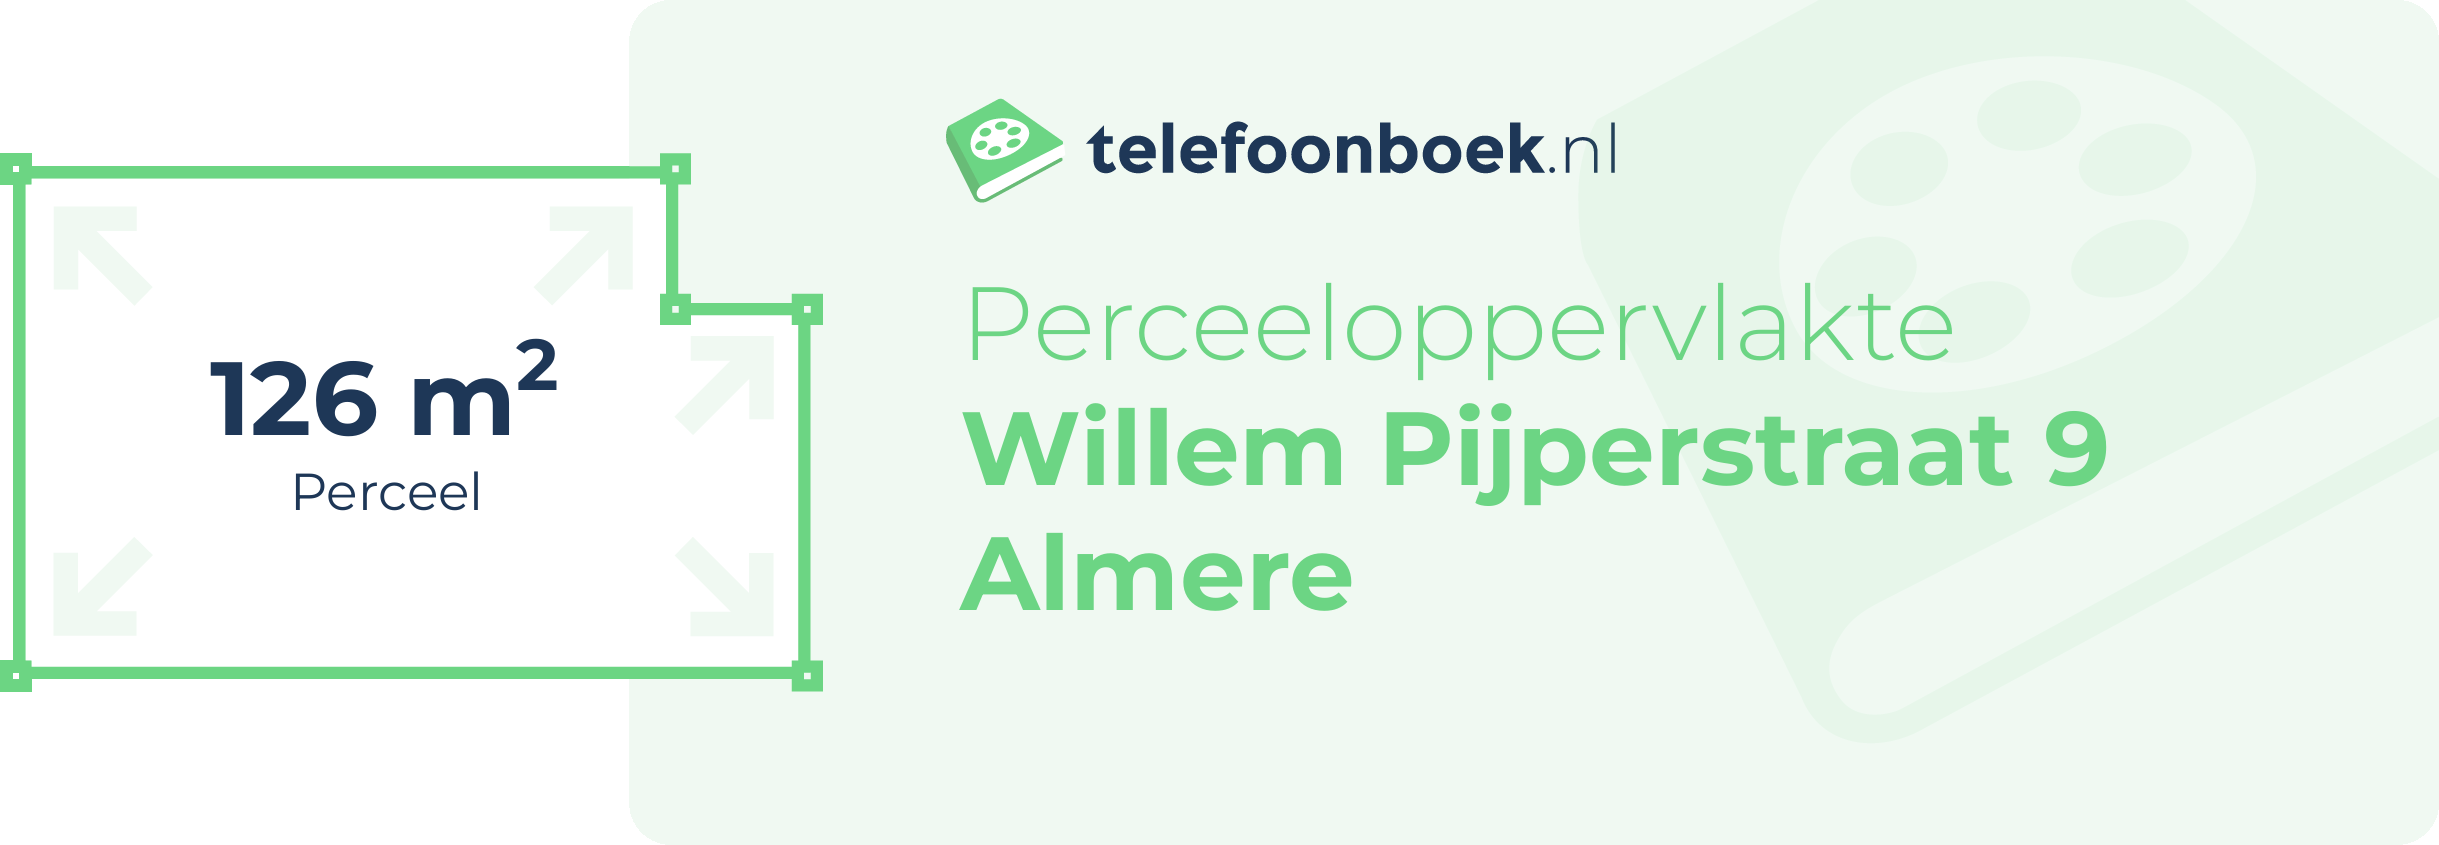 Perceeloppervlakte Willem Pijperstraat 9 Almere